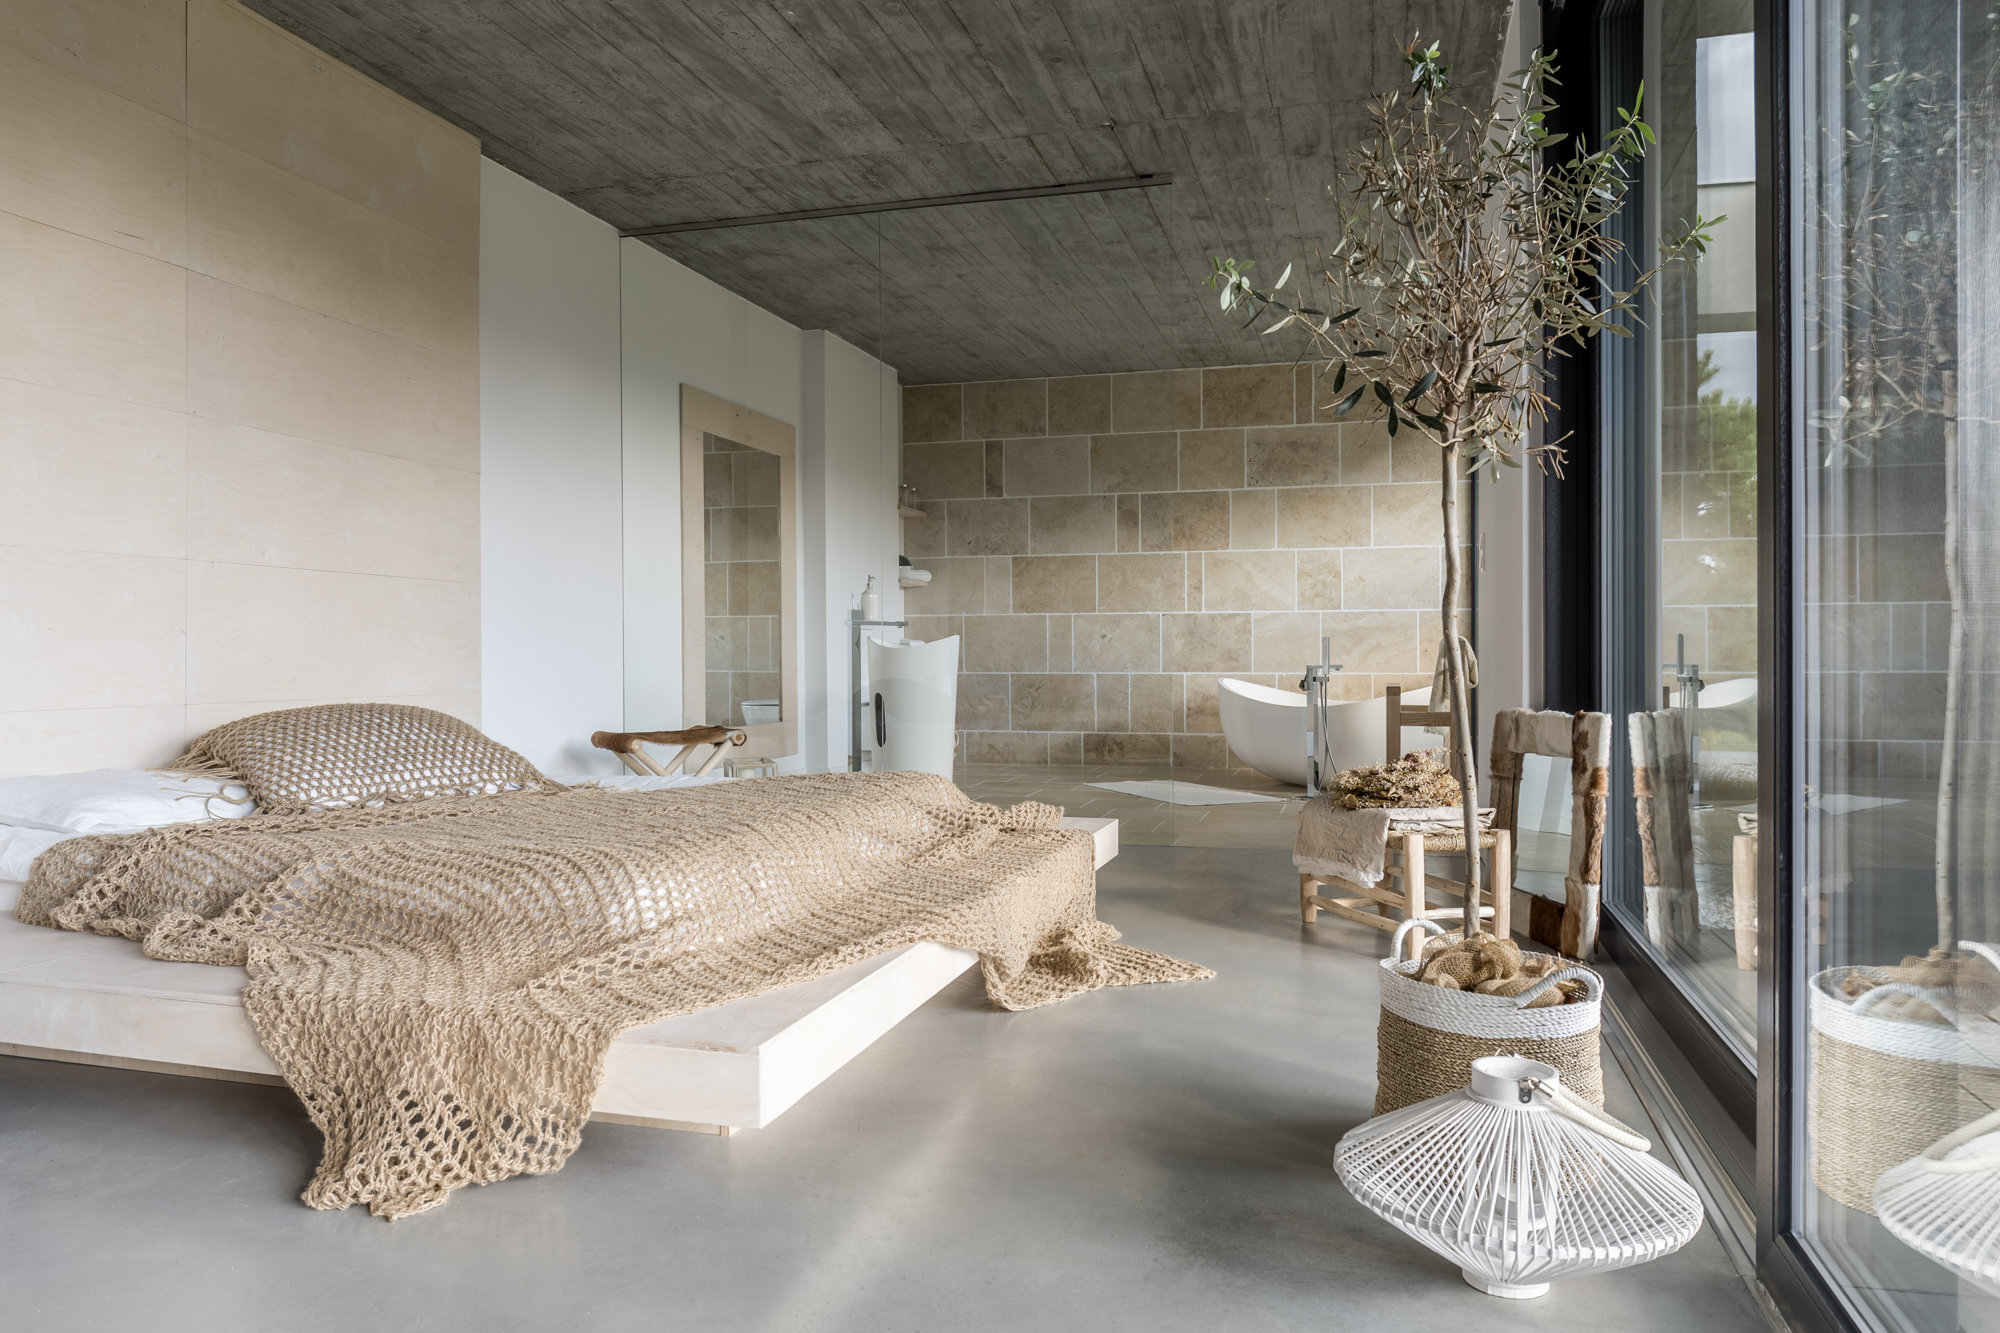 Dormitorio abierto al baño minimalista con mampara invisible